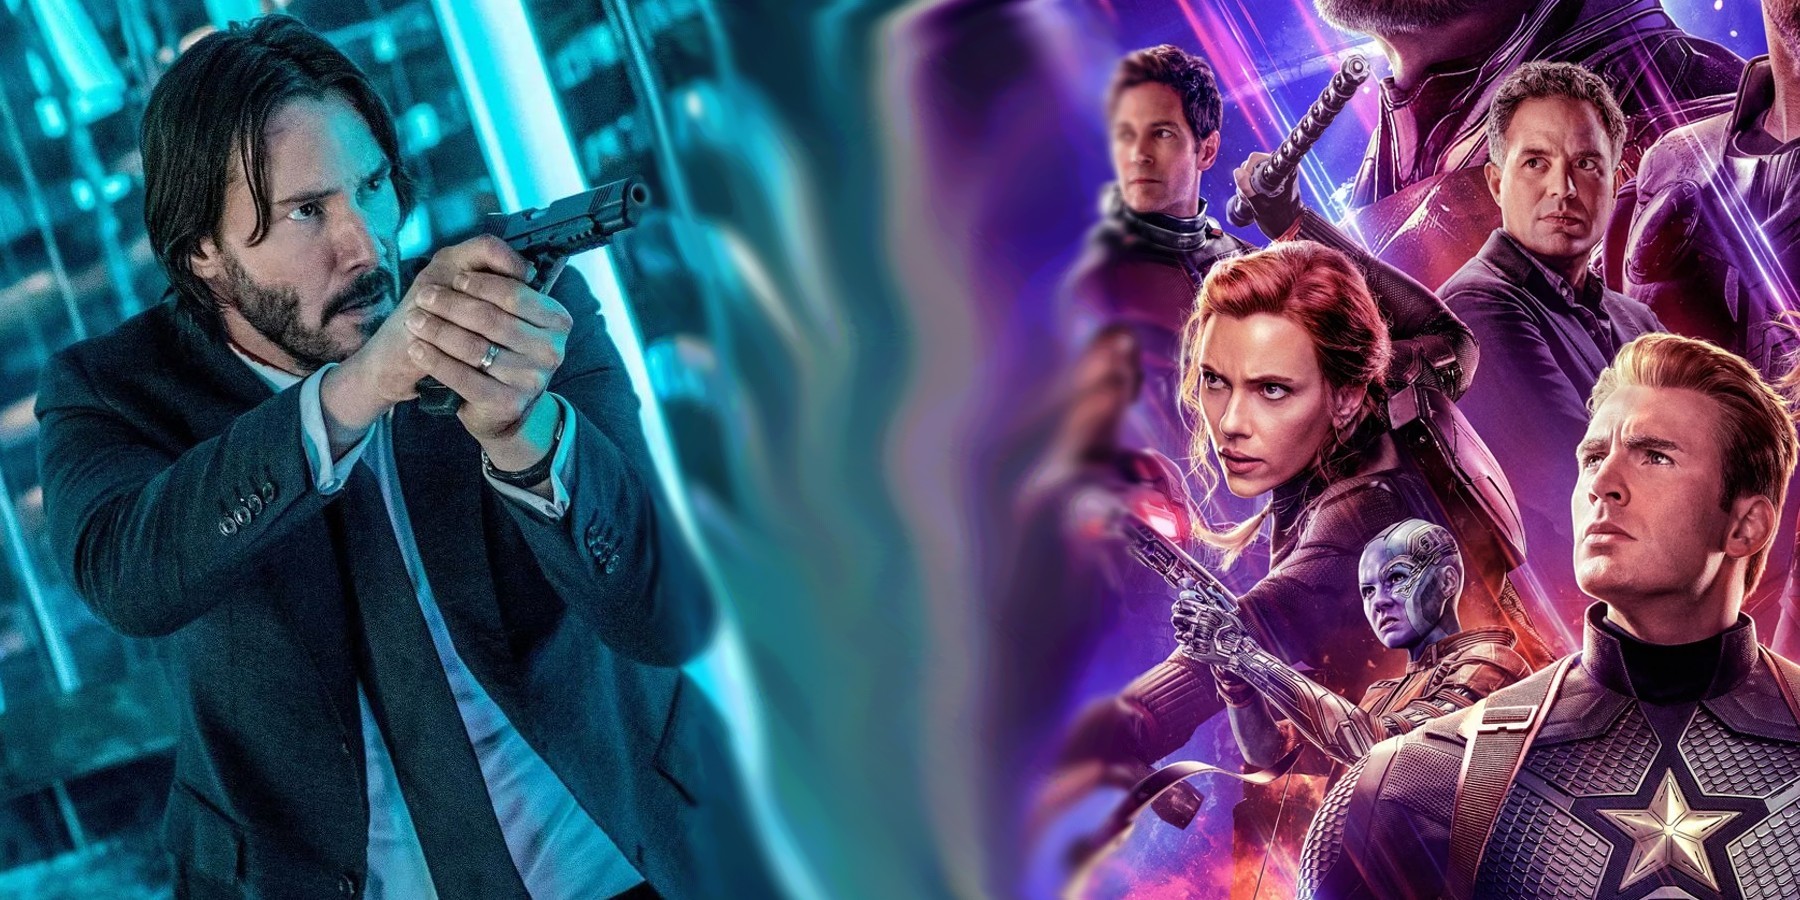 John Wick' Shot Down 'Avengers' at the Box Office